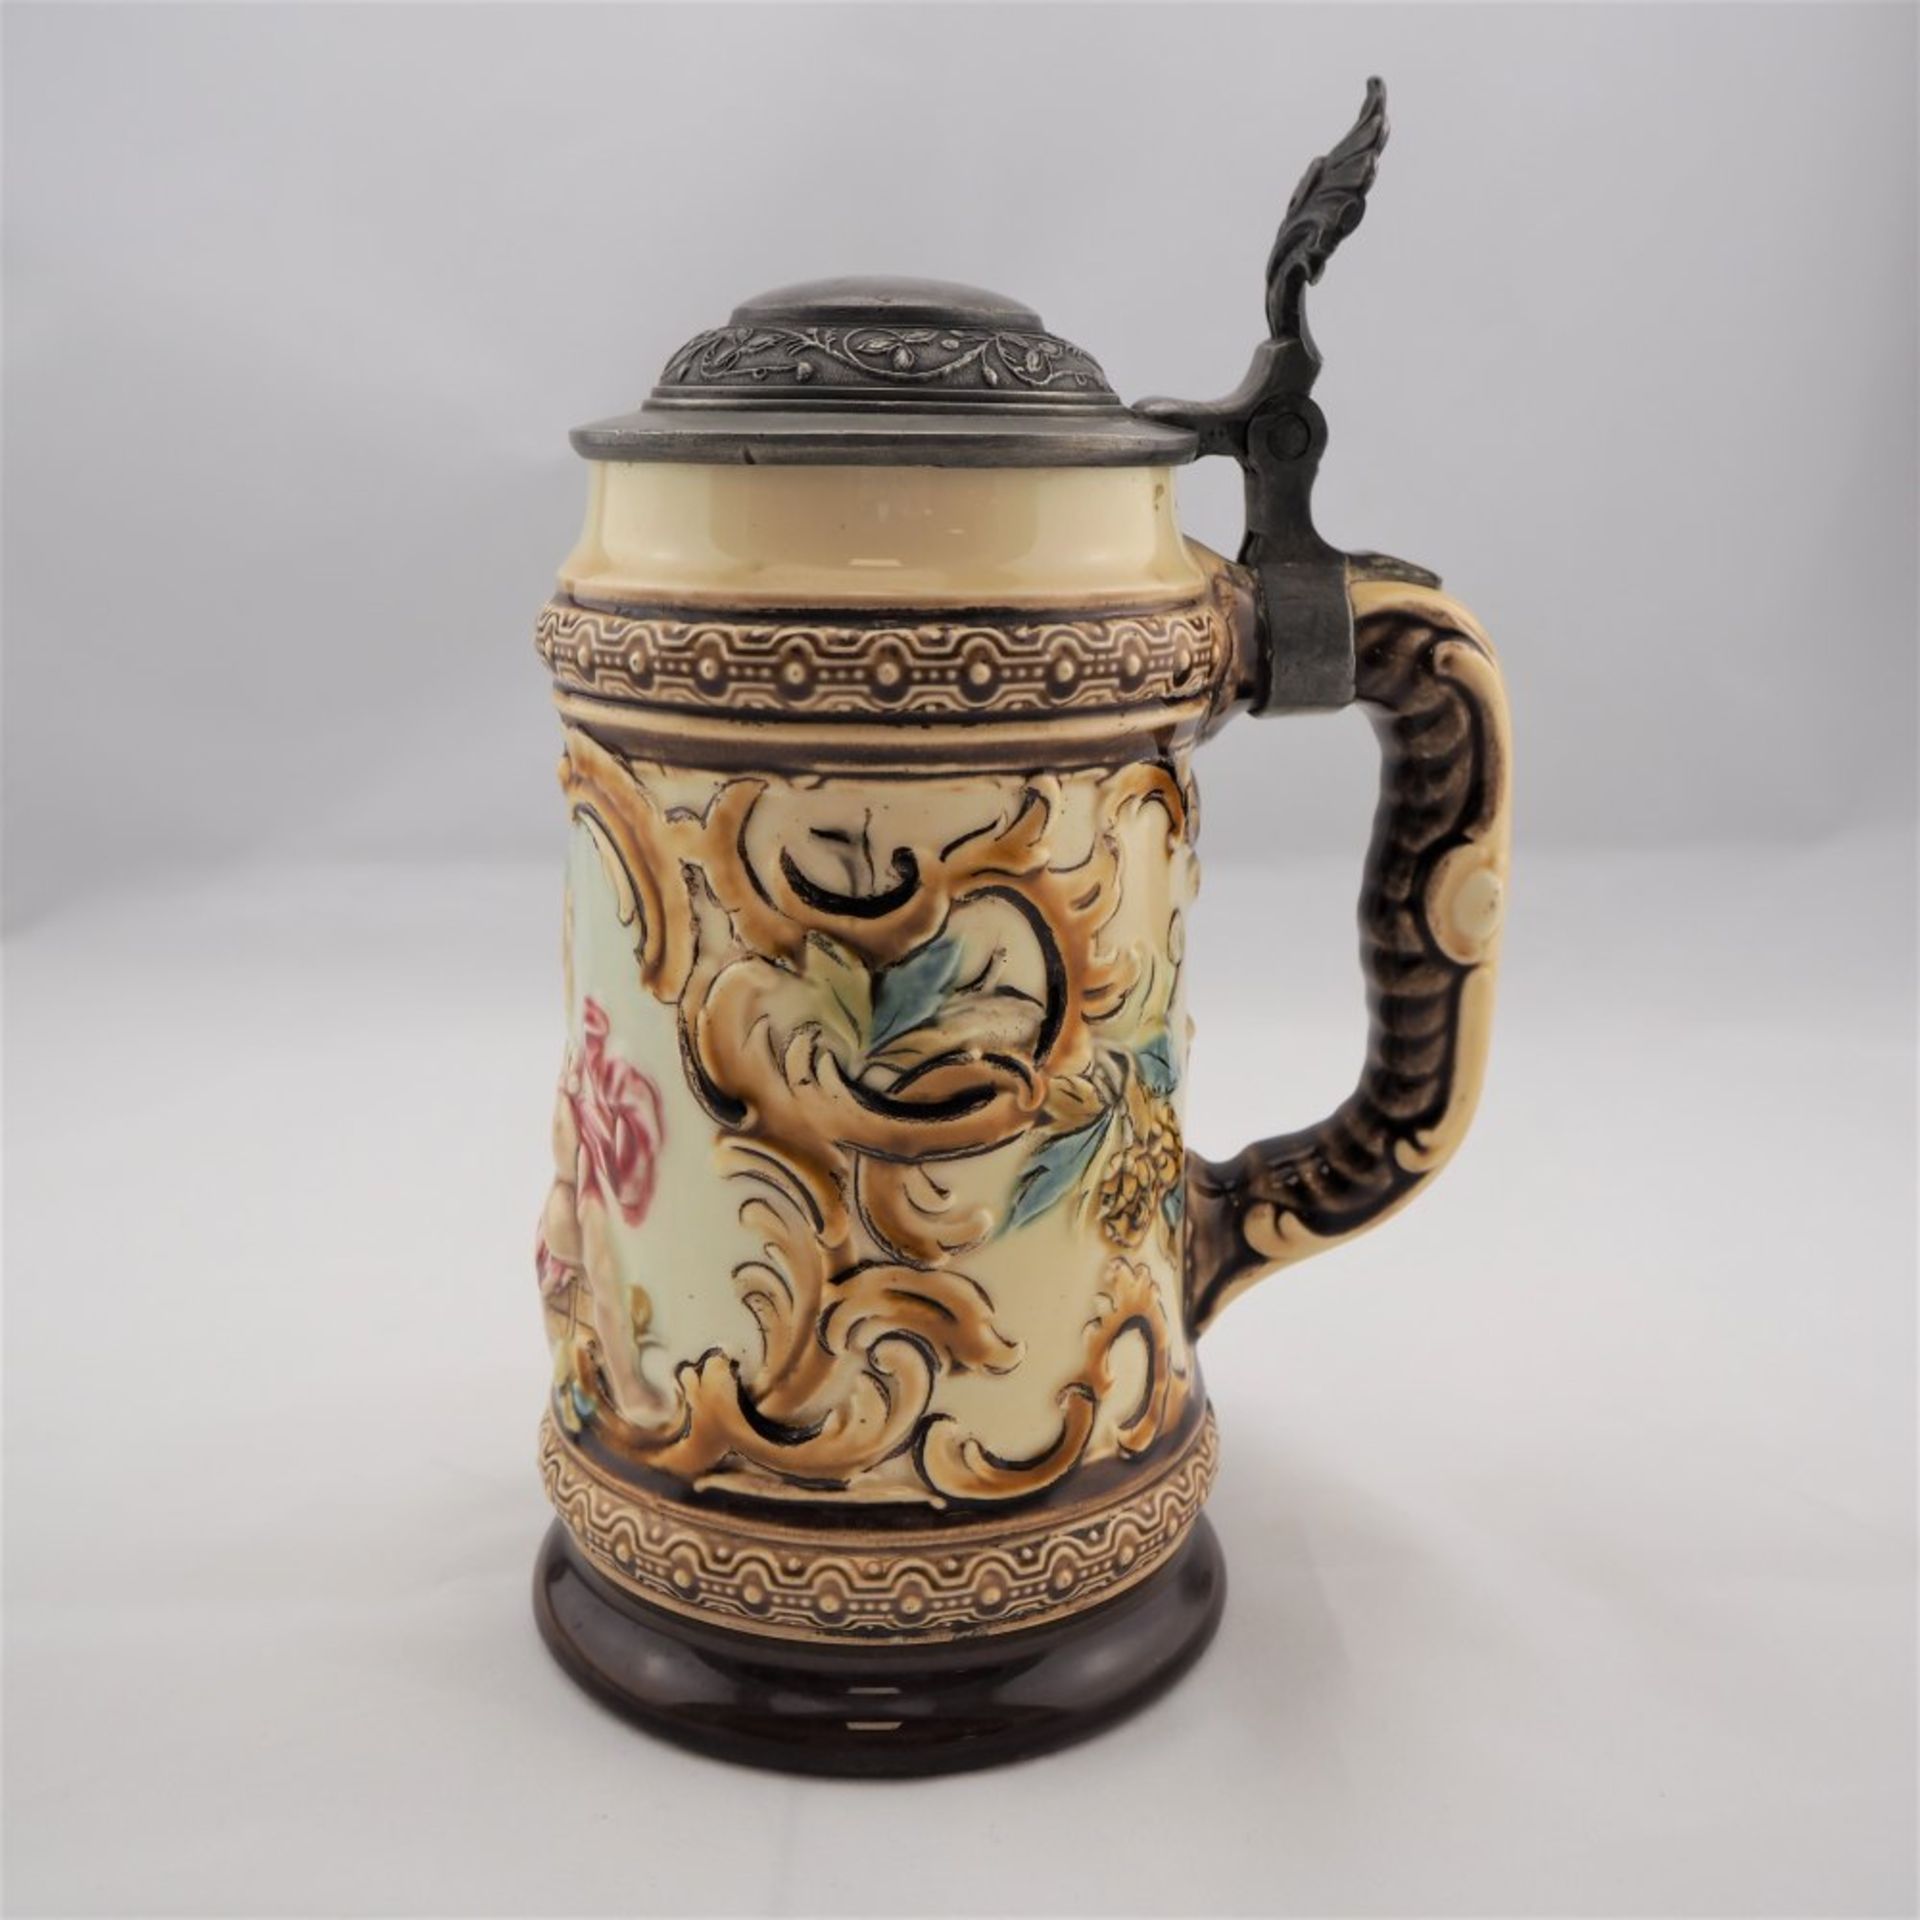 Beer mug, around 1880 - Image 3 of 3